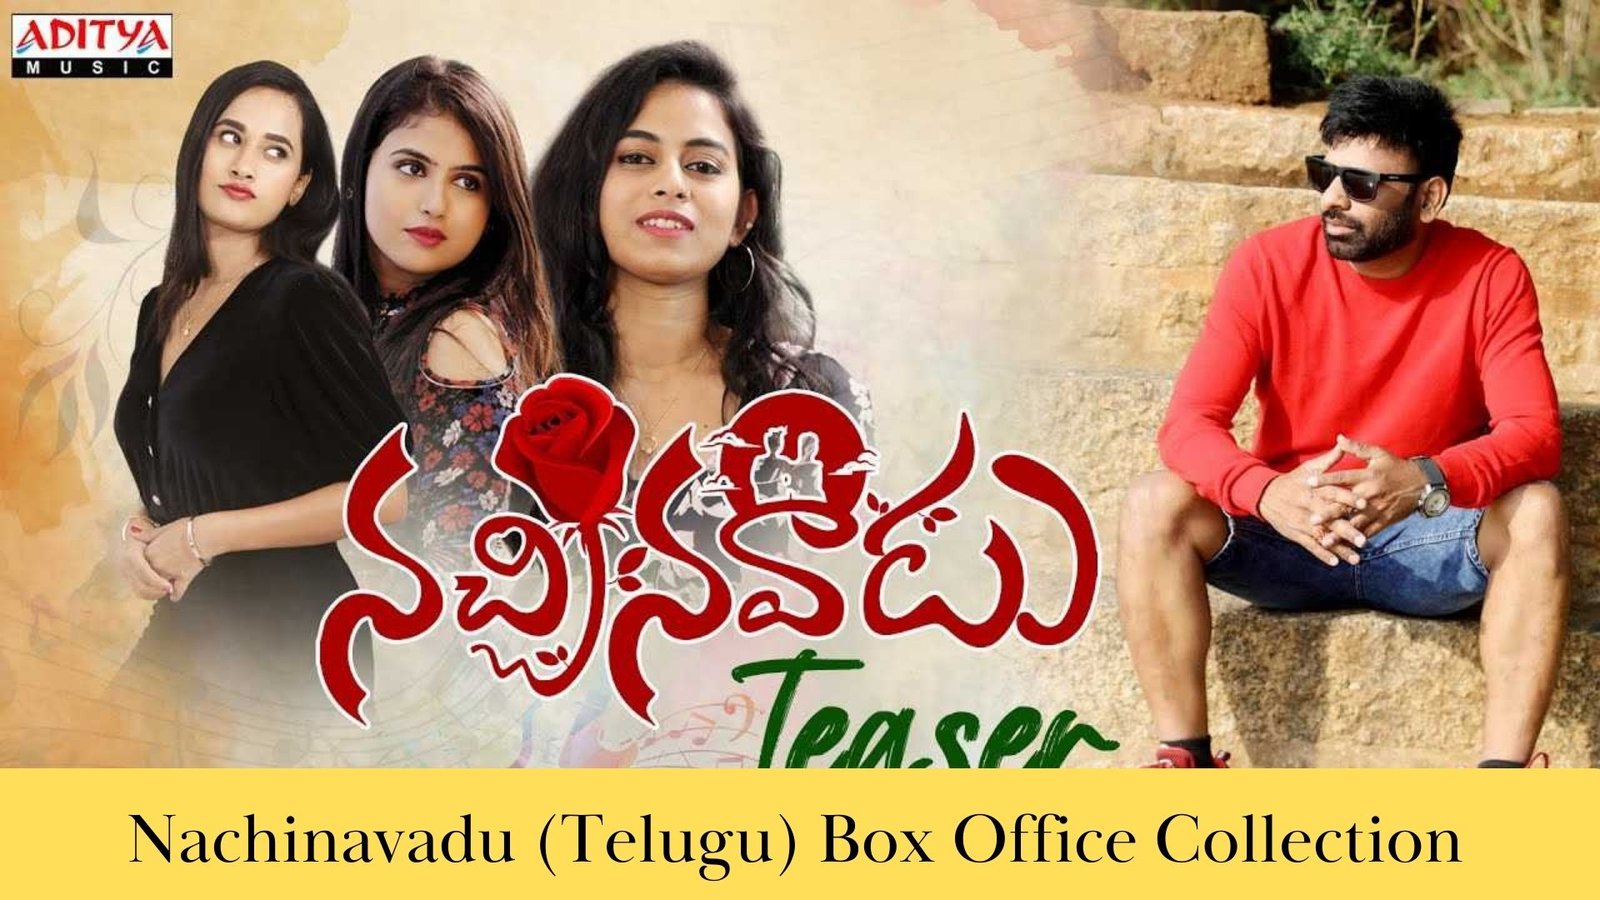 Nachinavadu (Telugu) Movie Box Office Collection and Budget